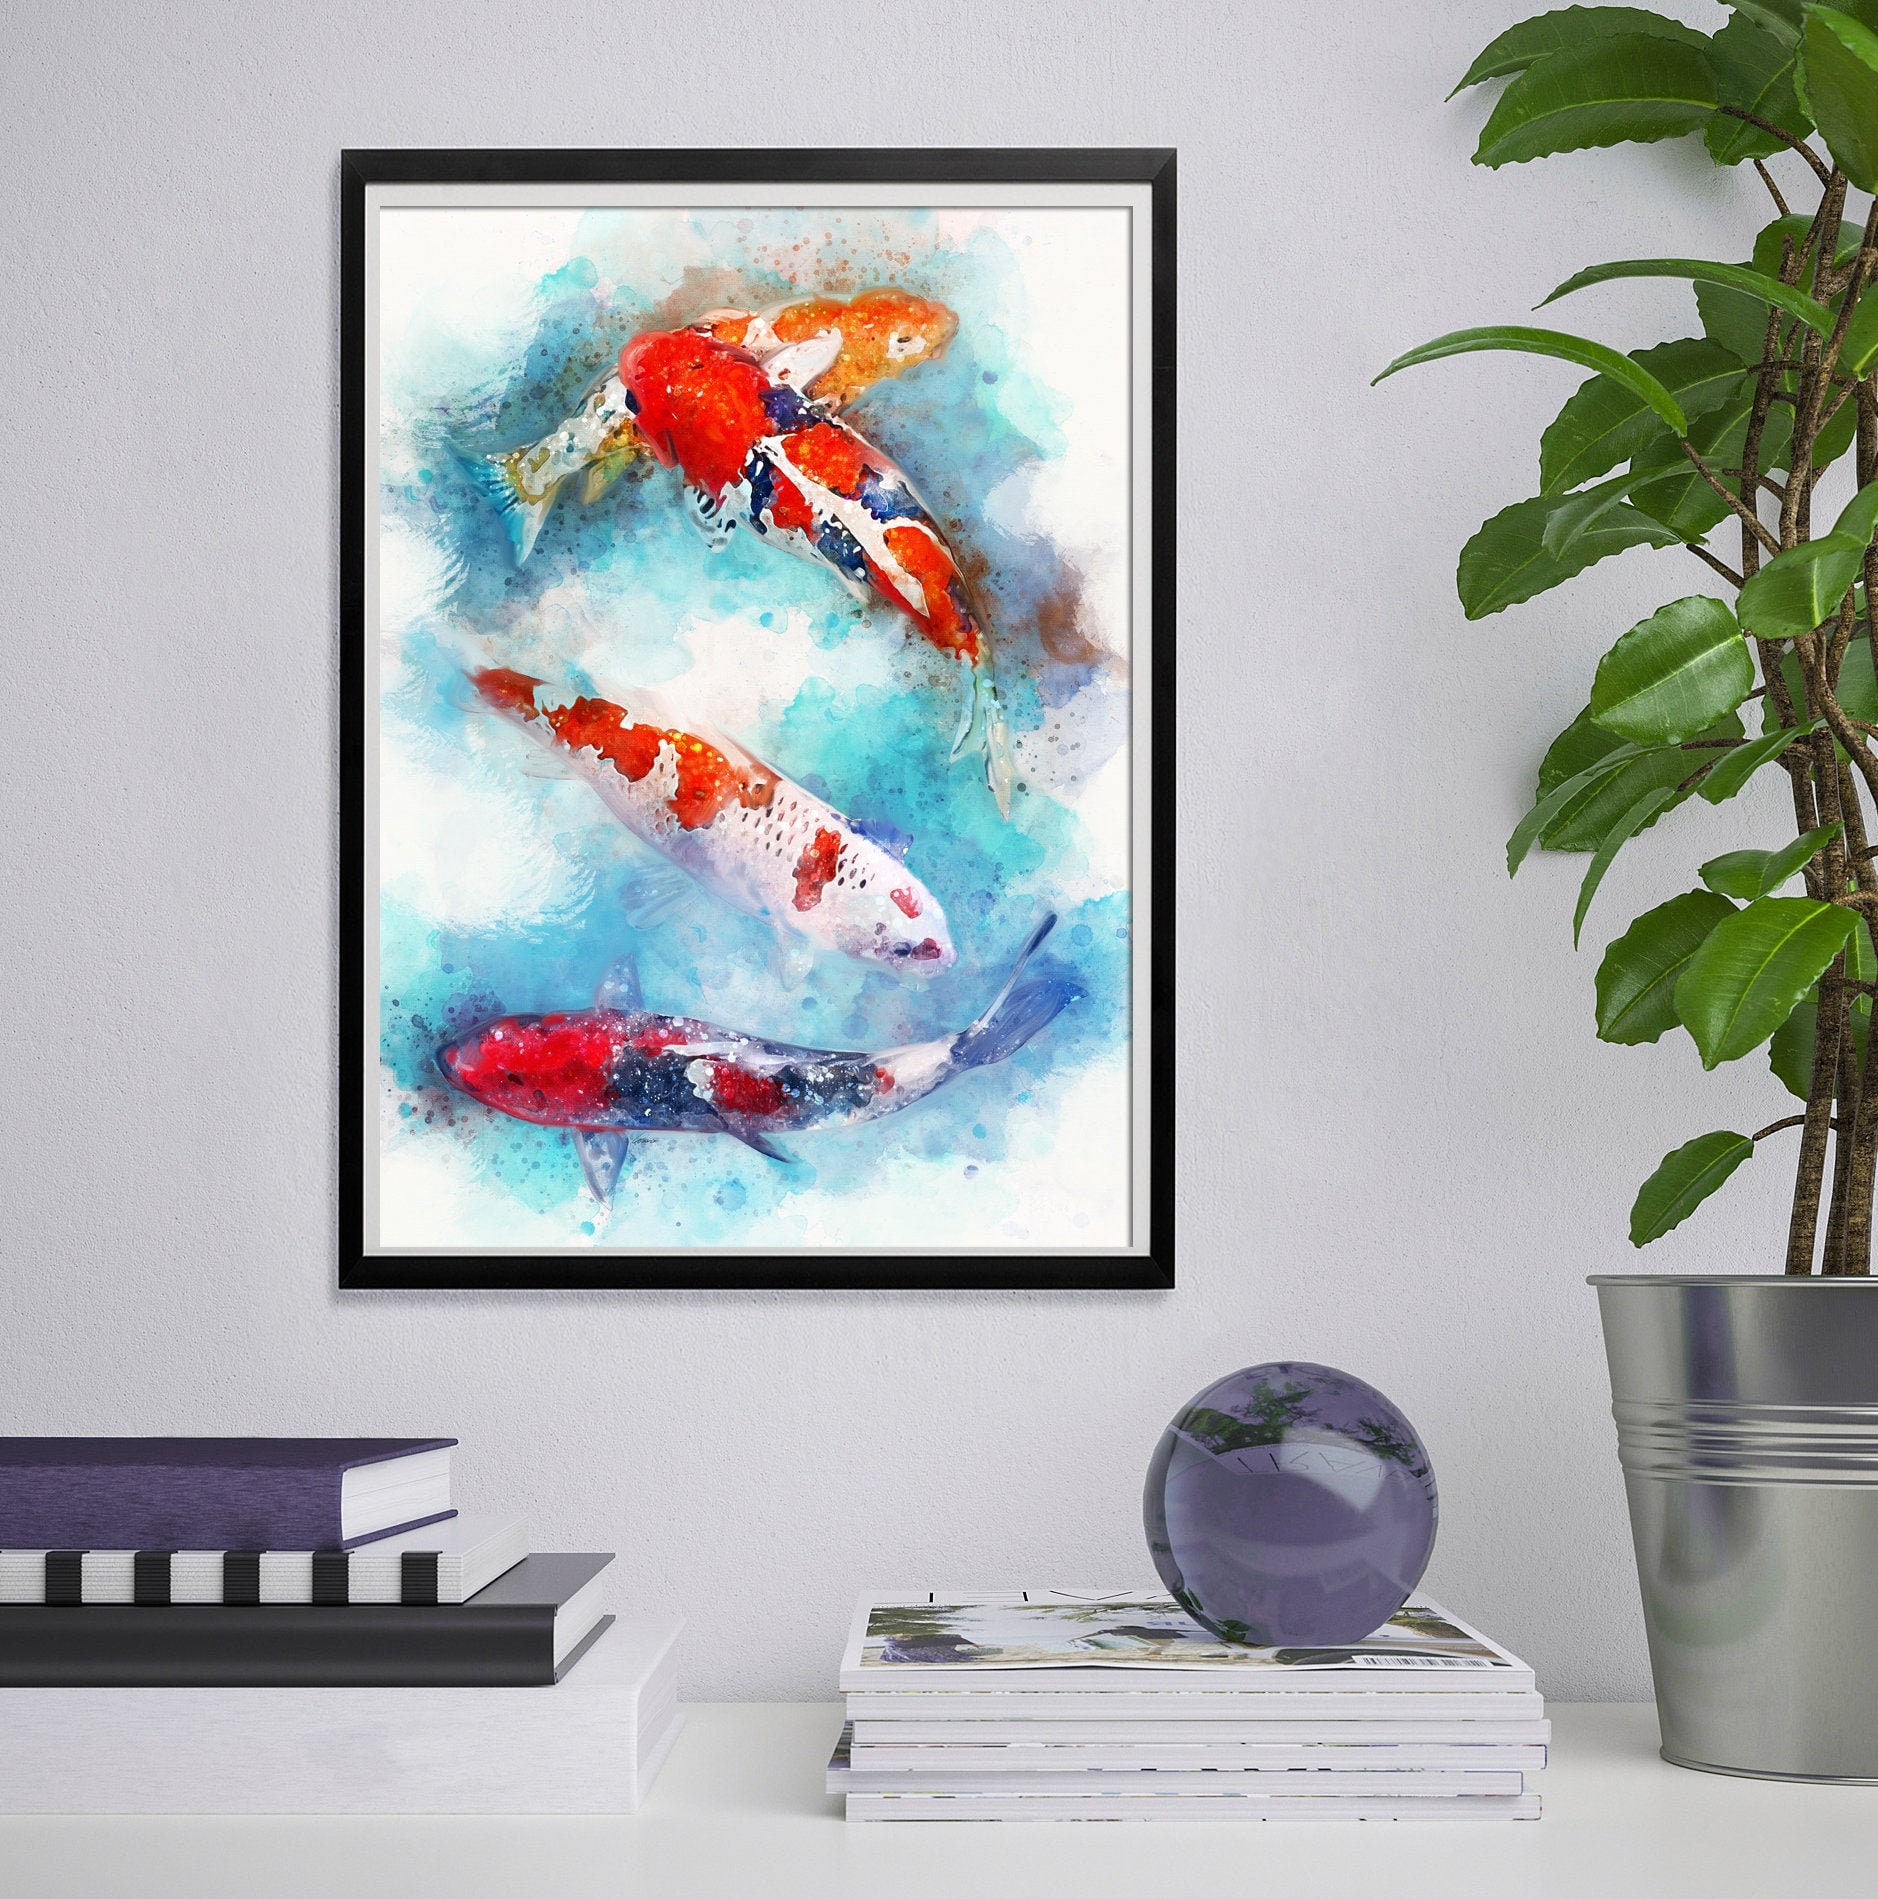 Japanese Koi Fish Pond Large Framed Art Print Wall Poster 18x24 inch 